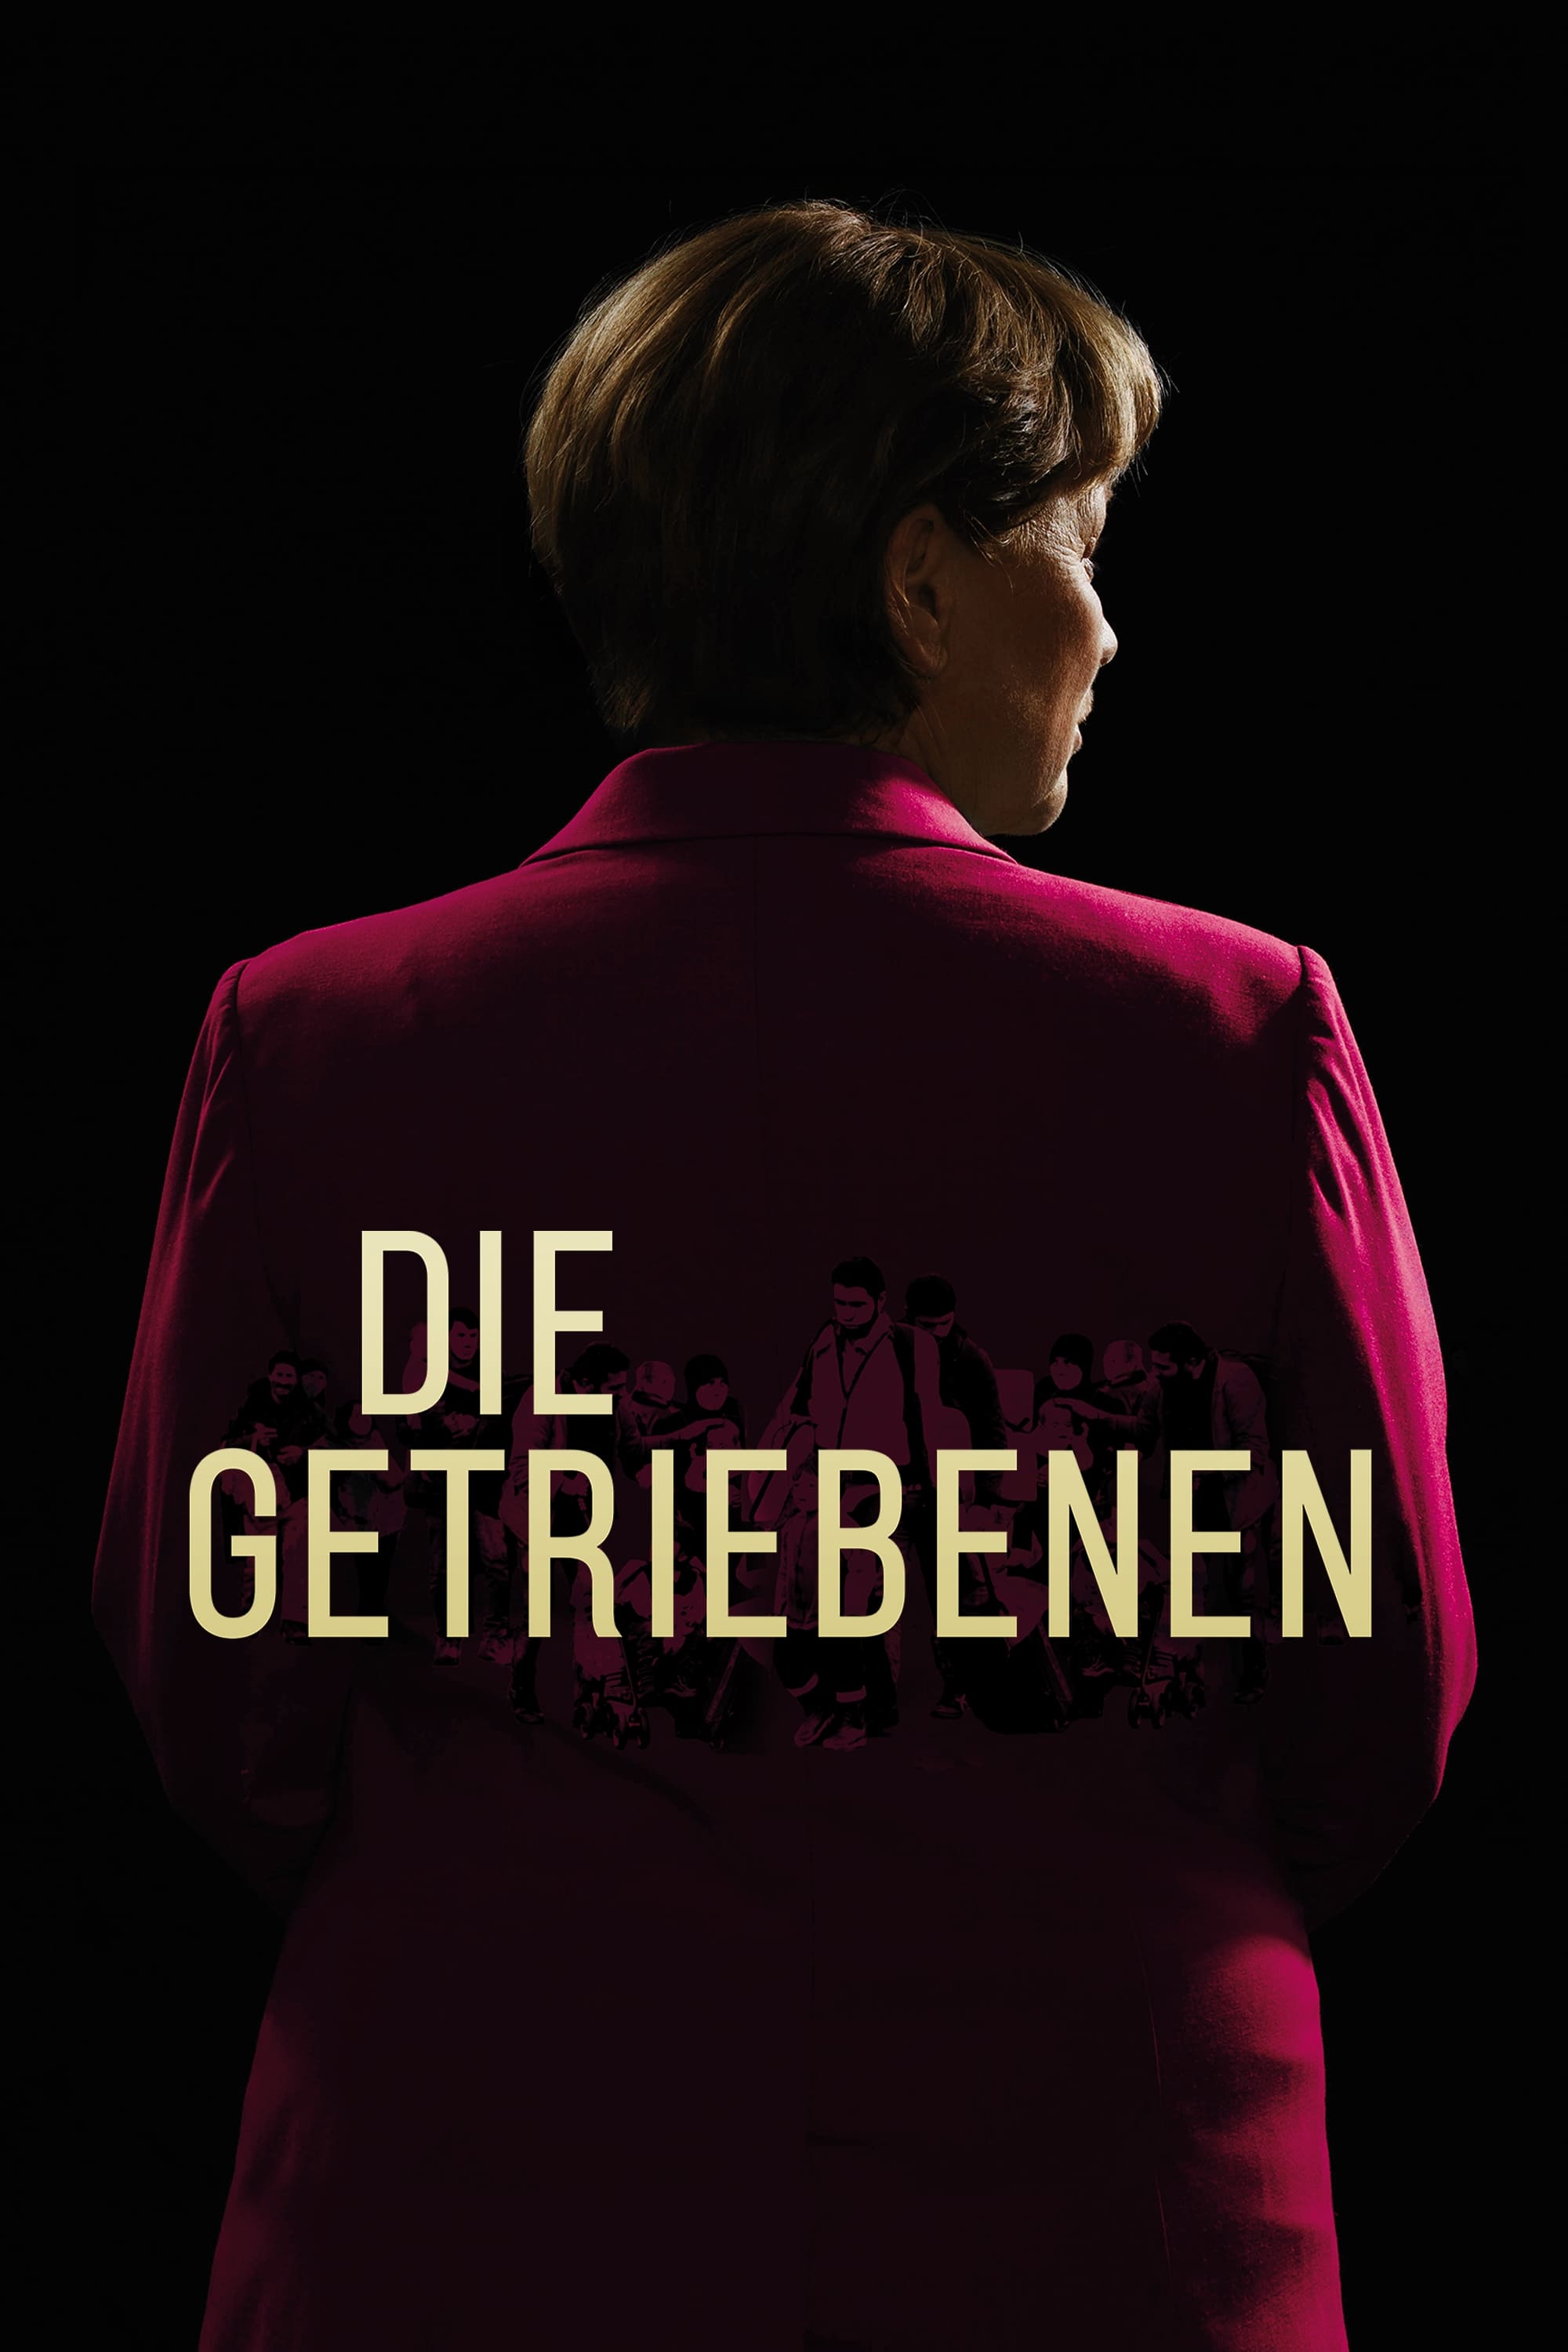 Merkel: Anatomy of a Crisis